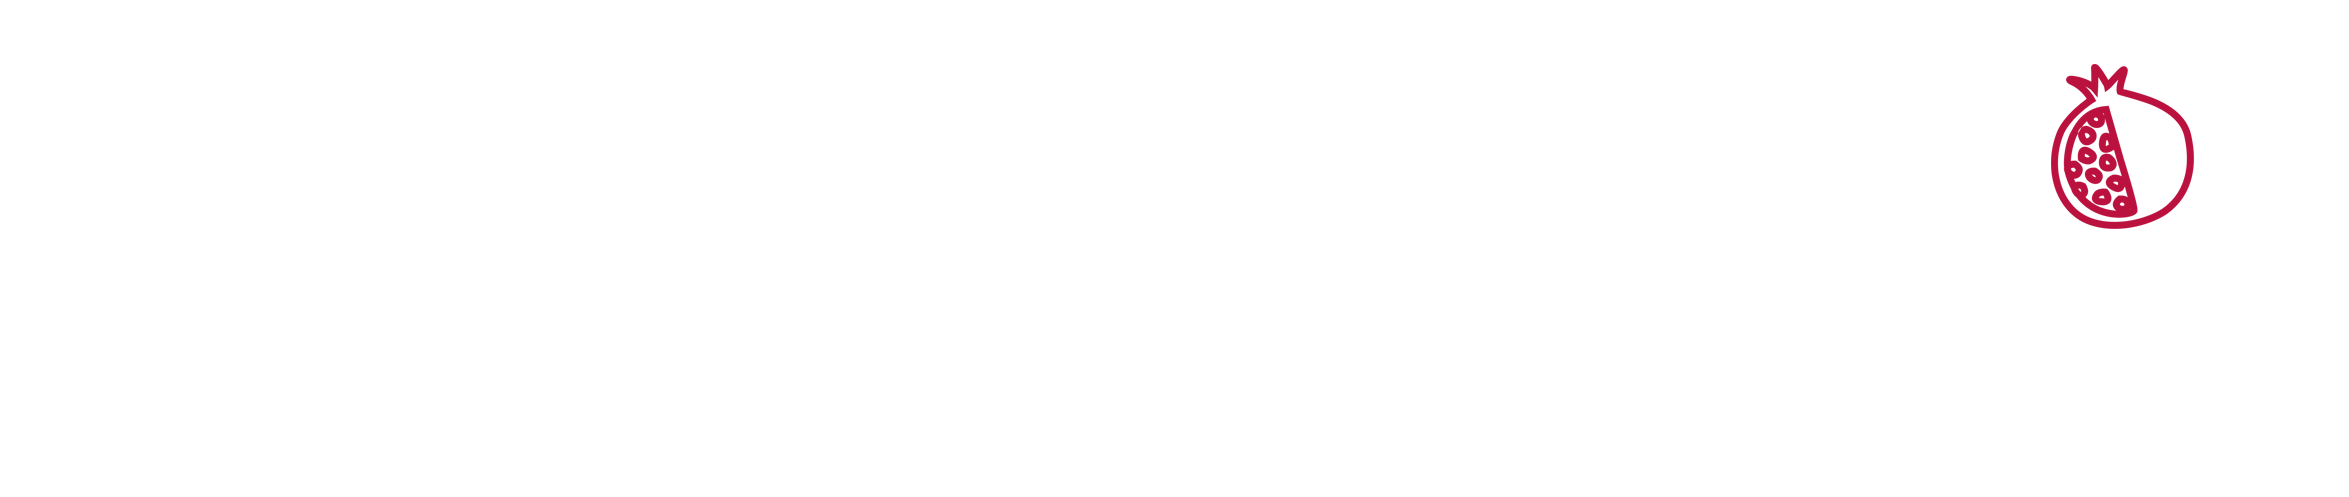 Web Design Bangkok Thailand Website Development White Text